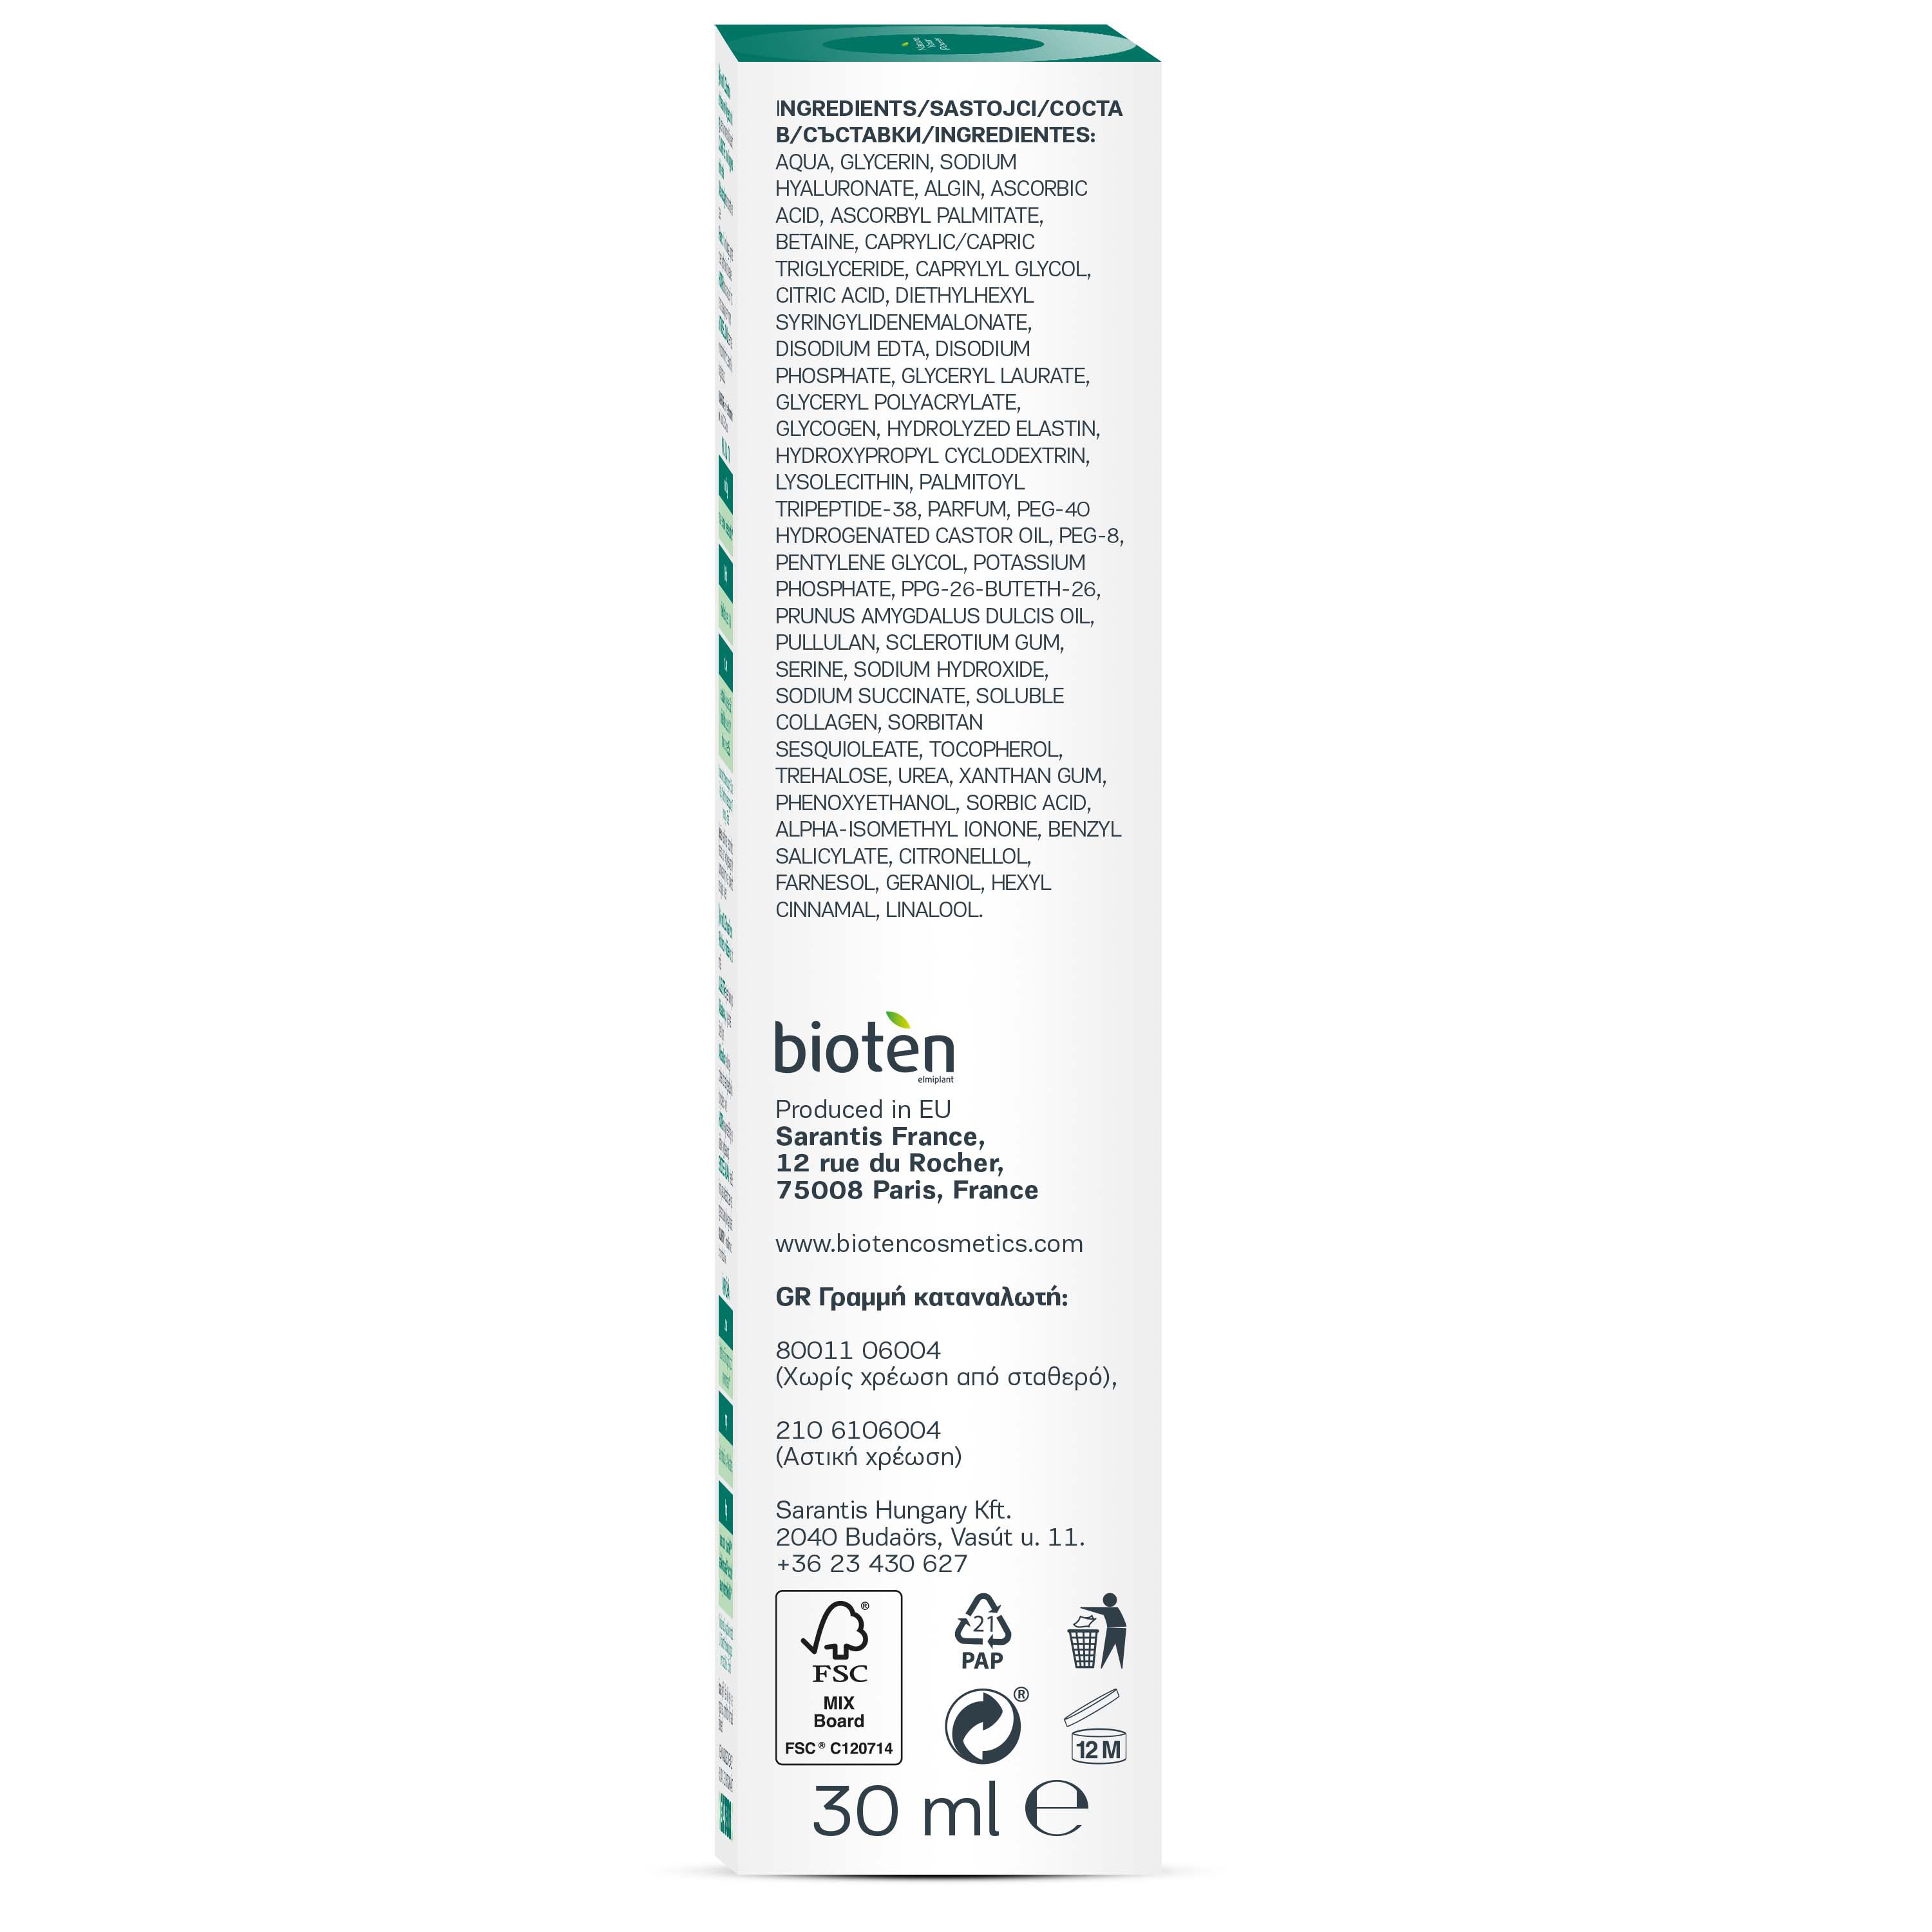 Bioten Multı-collagen Konsantre Serum 30ml